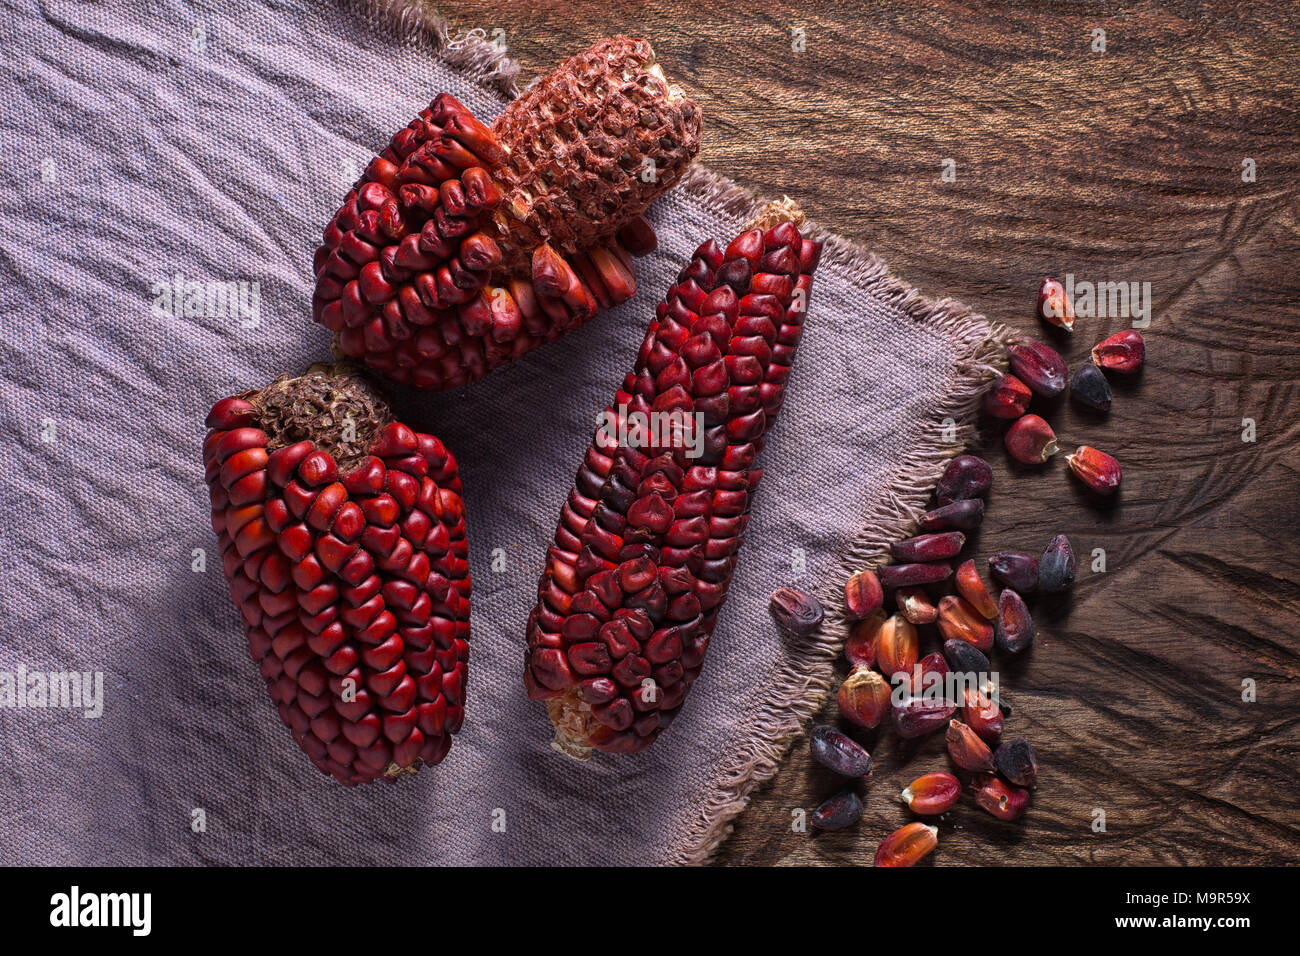 heirloom corn from Ecuador in rustic setting Stock Photo